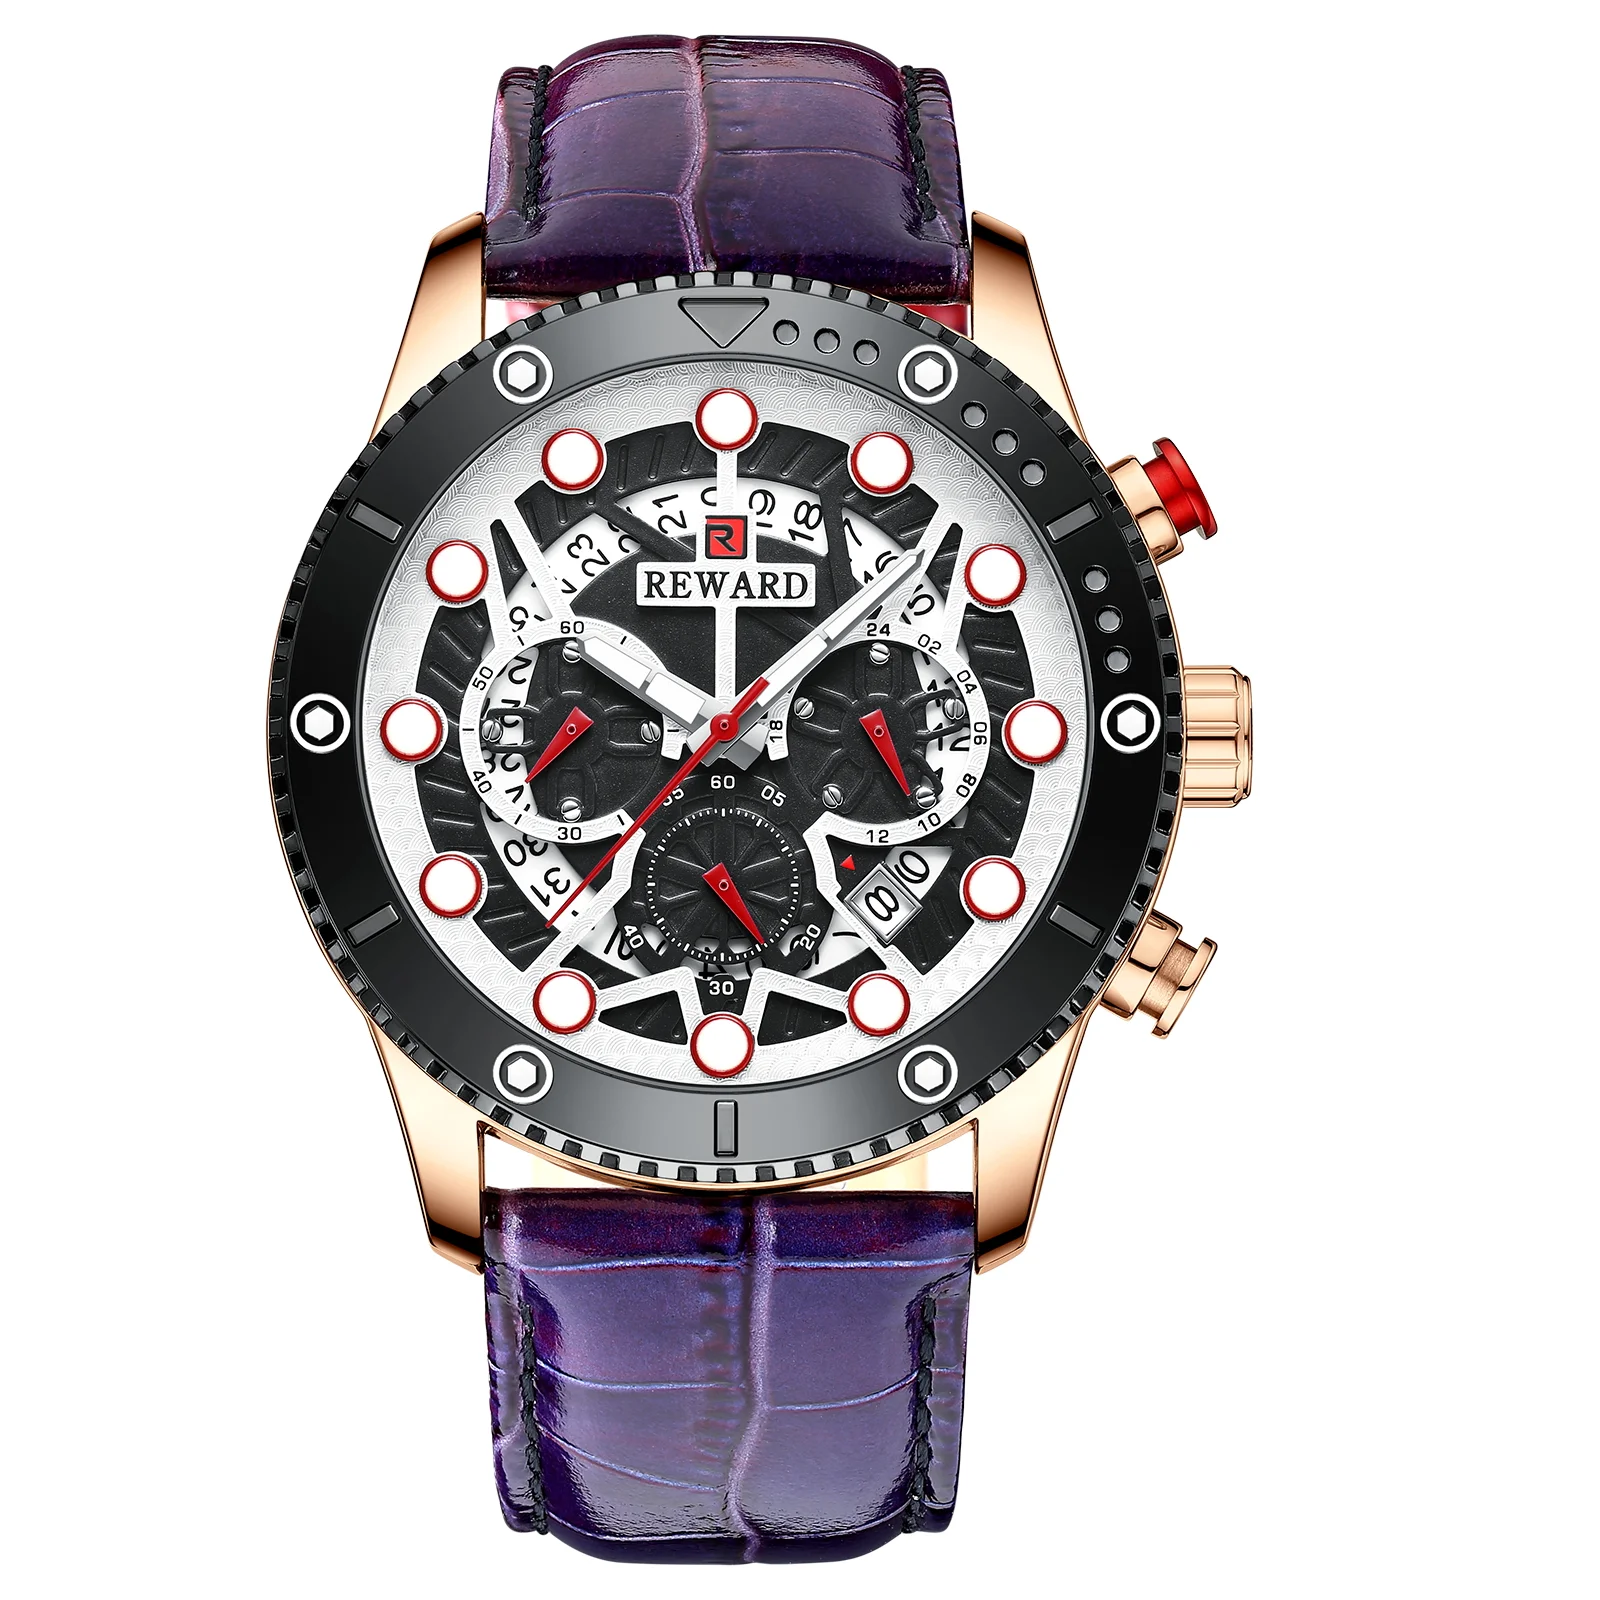 Reward Male Watches New Relogio Masculino Luminous Colorful Leather Band Chronograph Sport Luxury Brand Quartz Watch Men RD83011M